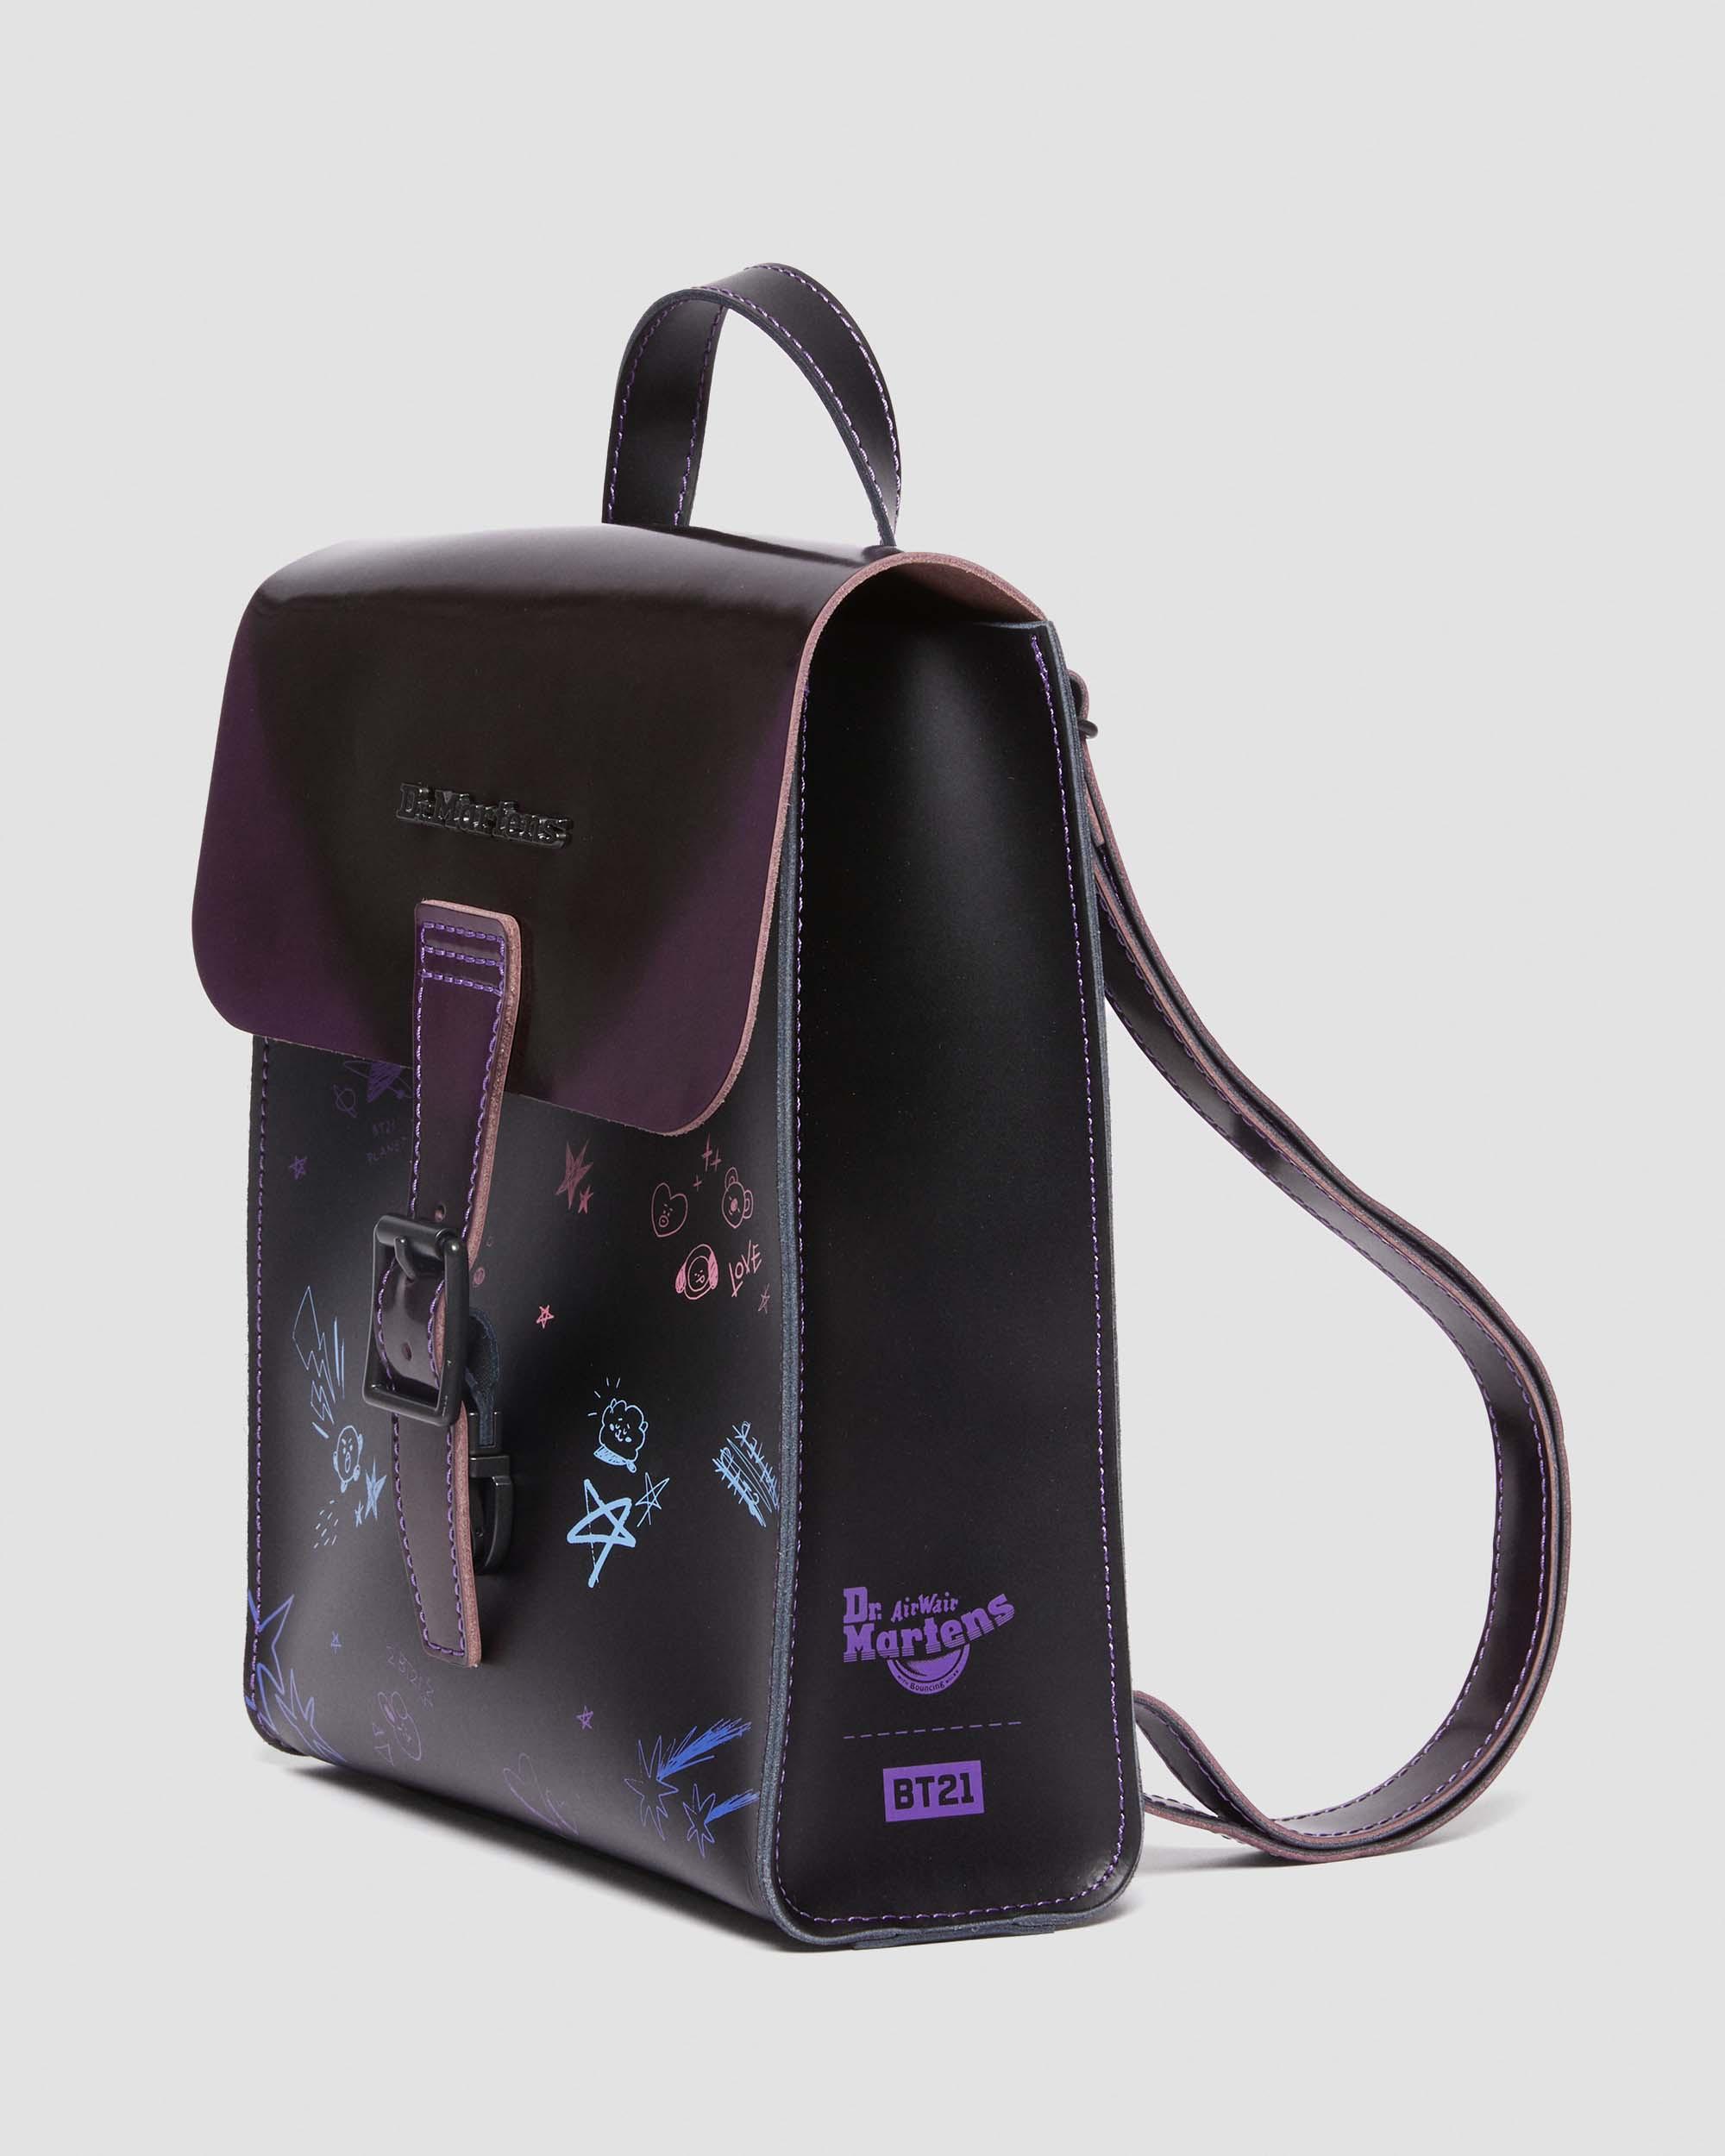 BT21 Mini Leather Backpack